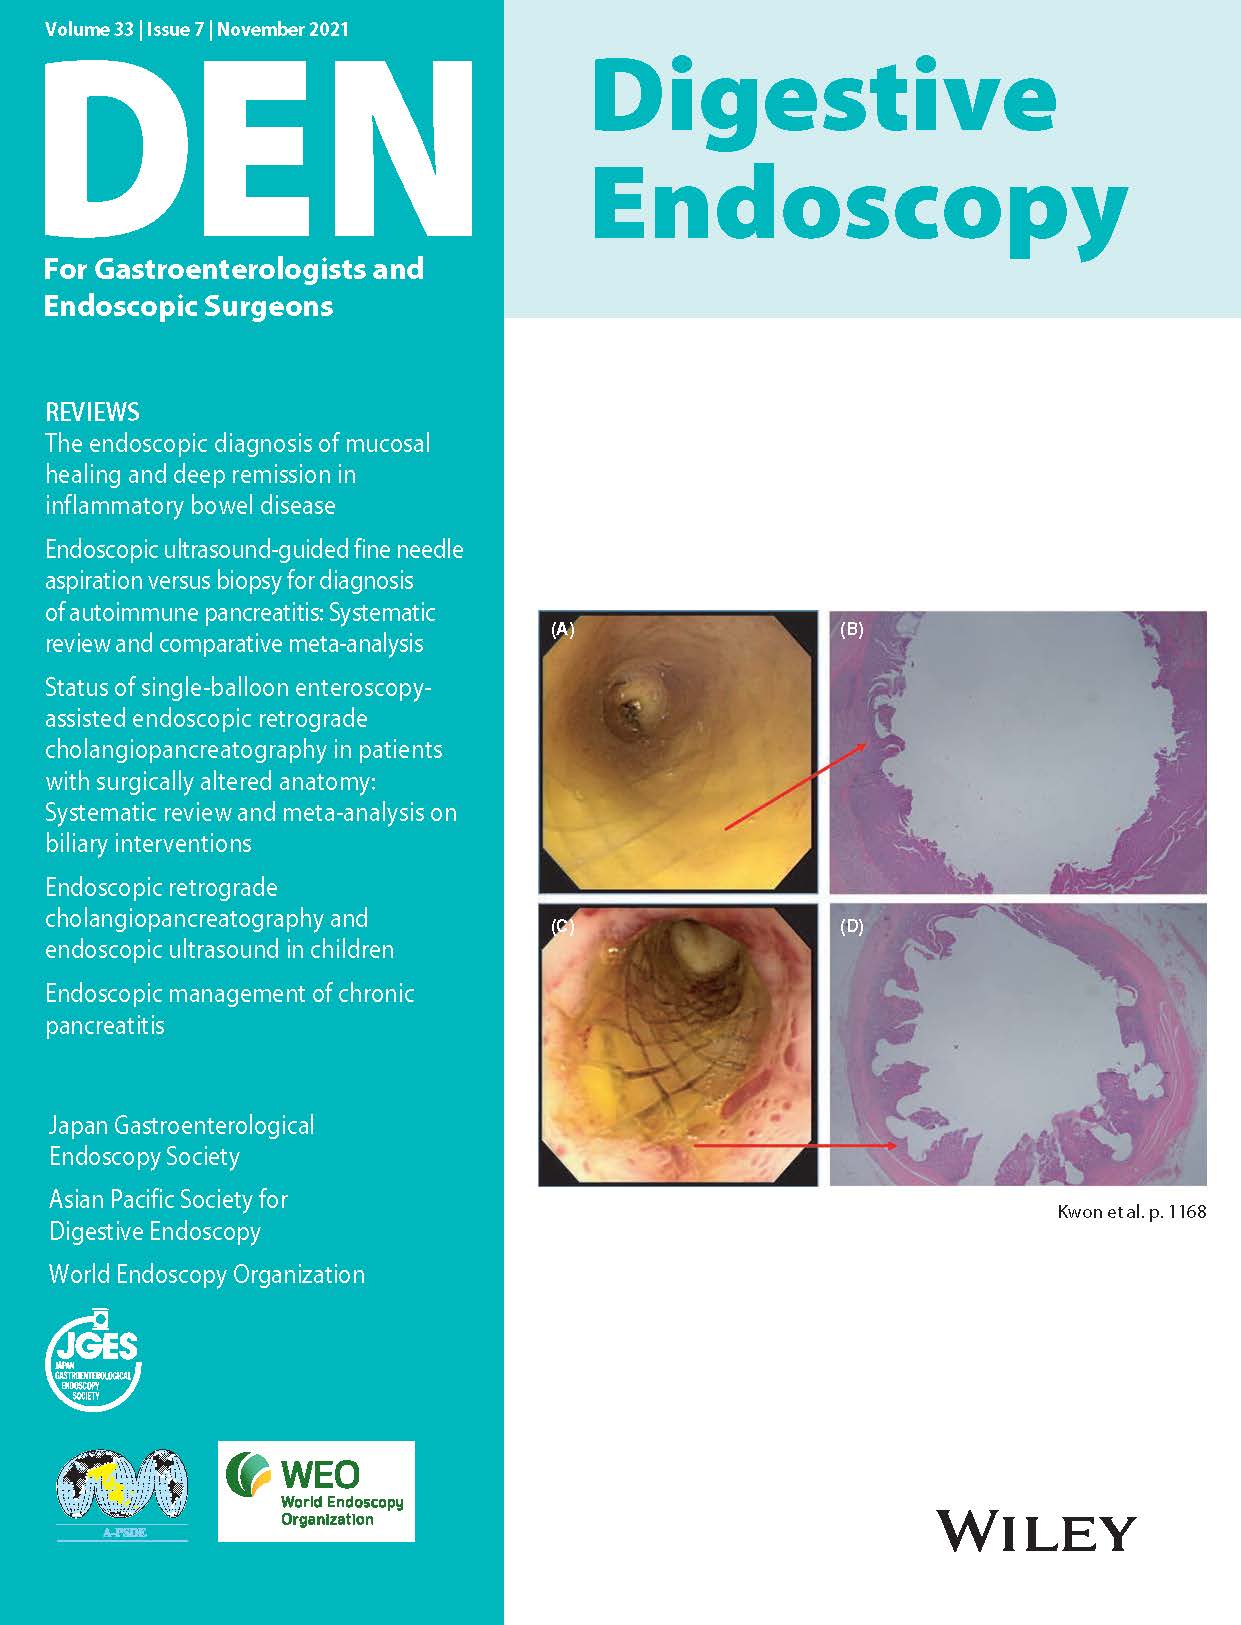 Digestive Endoscopy Vol33-7